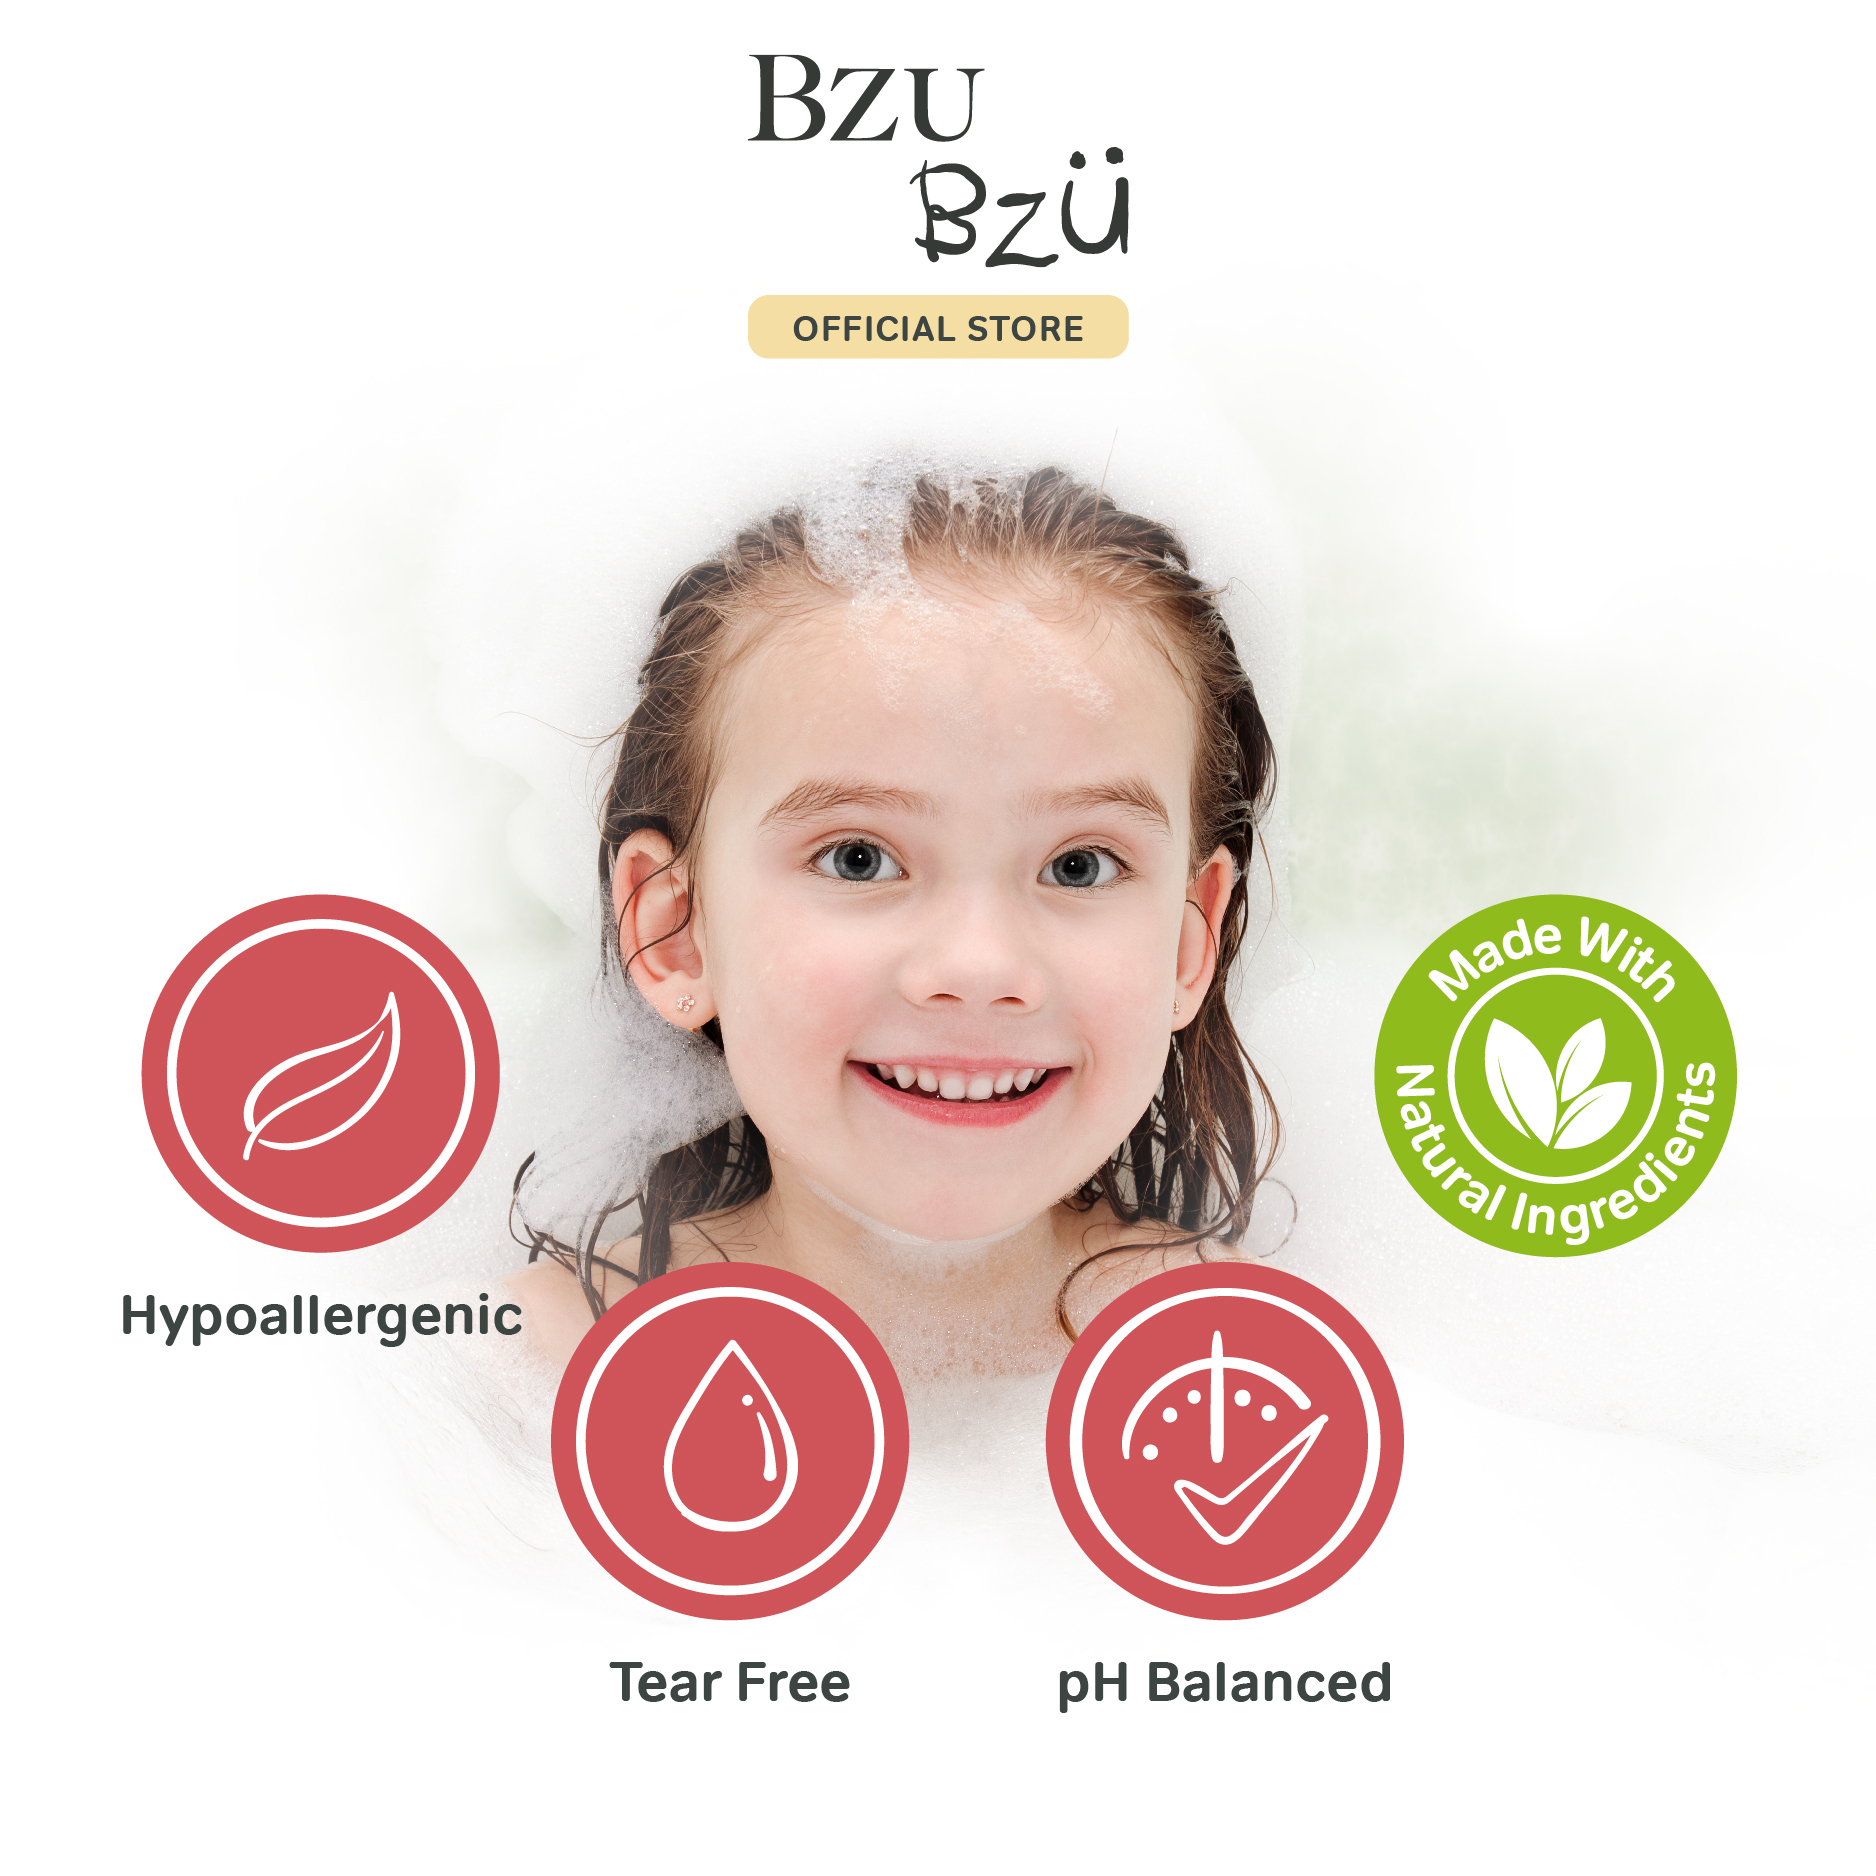 Bzu Bzu Silky Soft Kids Shampoo 600ml